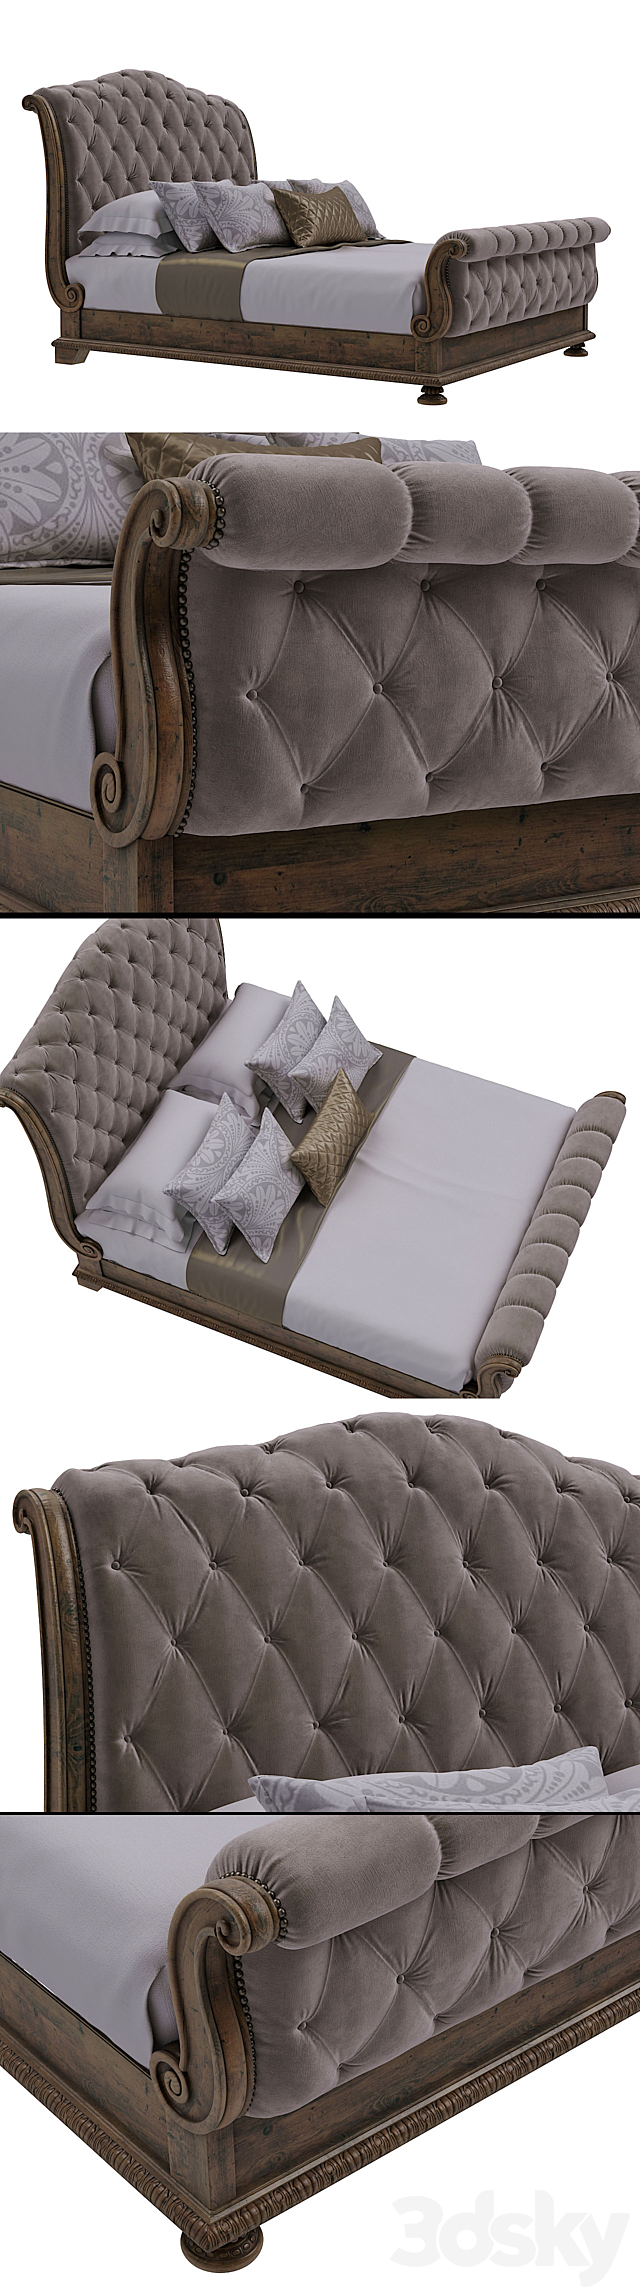 Furniture Bedroom Rhapsody King, Rhapsody King Tufted Bed